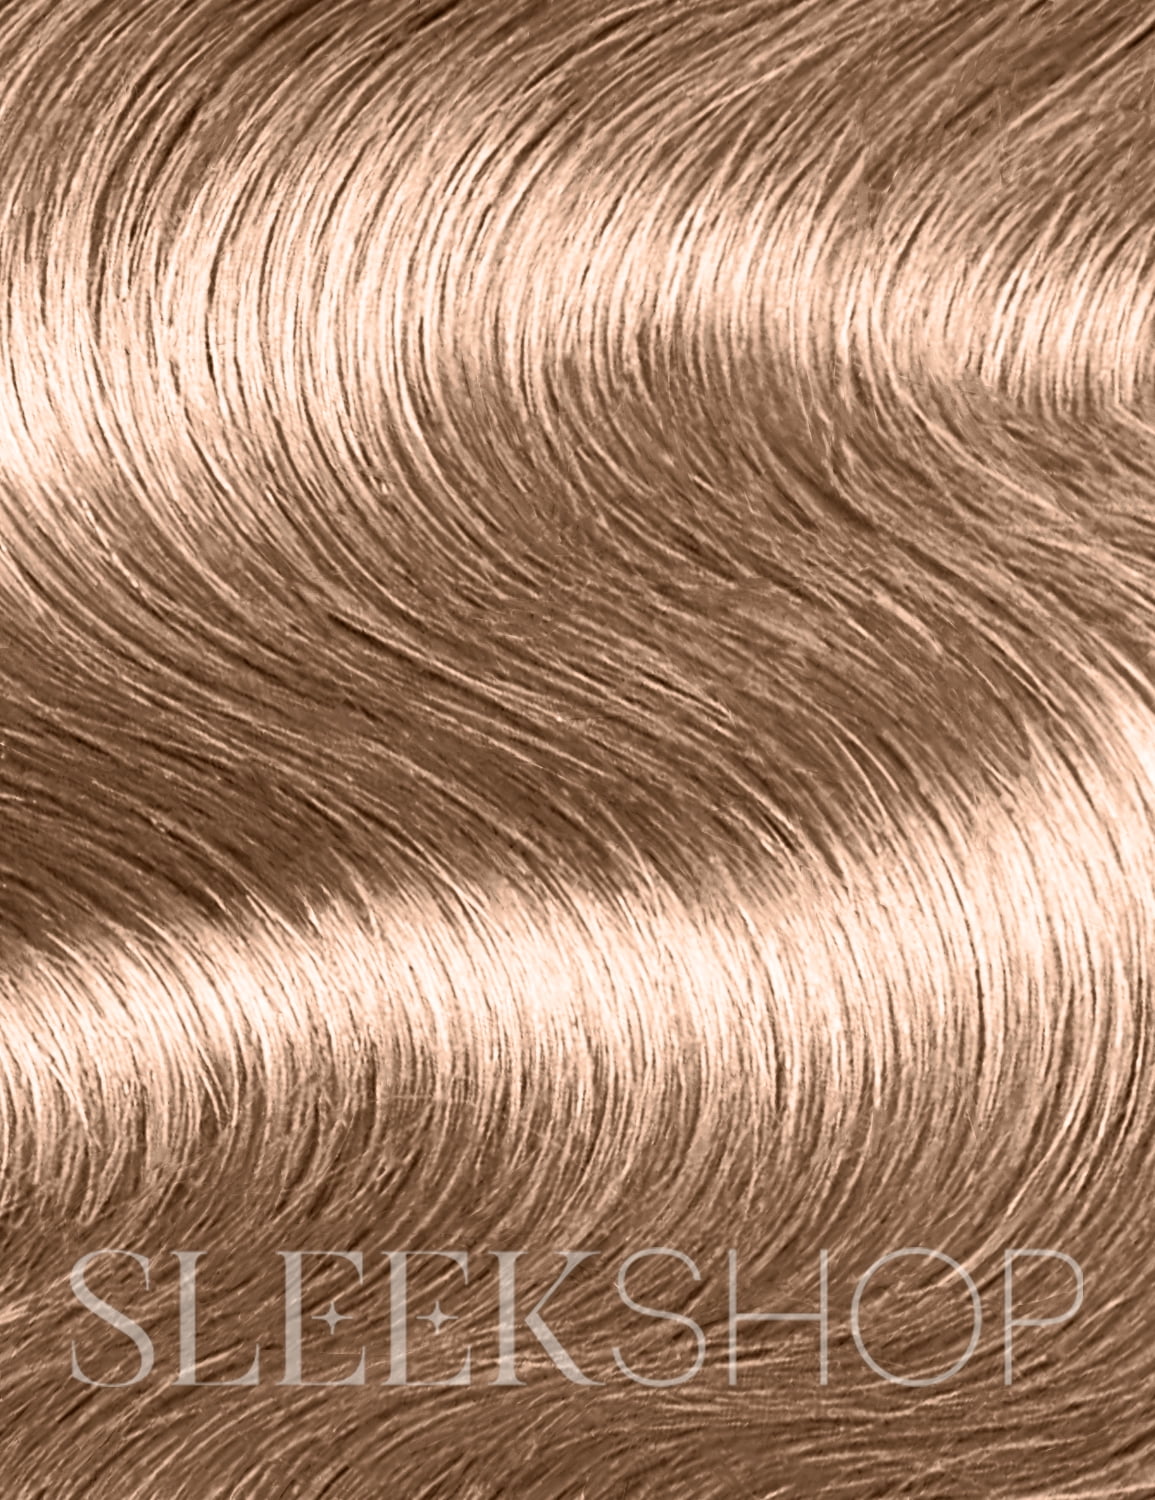 Schwarzkopf Igora Royal Permanent Hair Color - 7-77 Medium Blonde Copper  Extra 